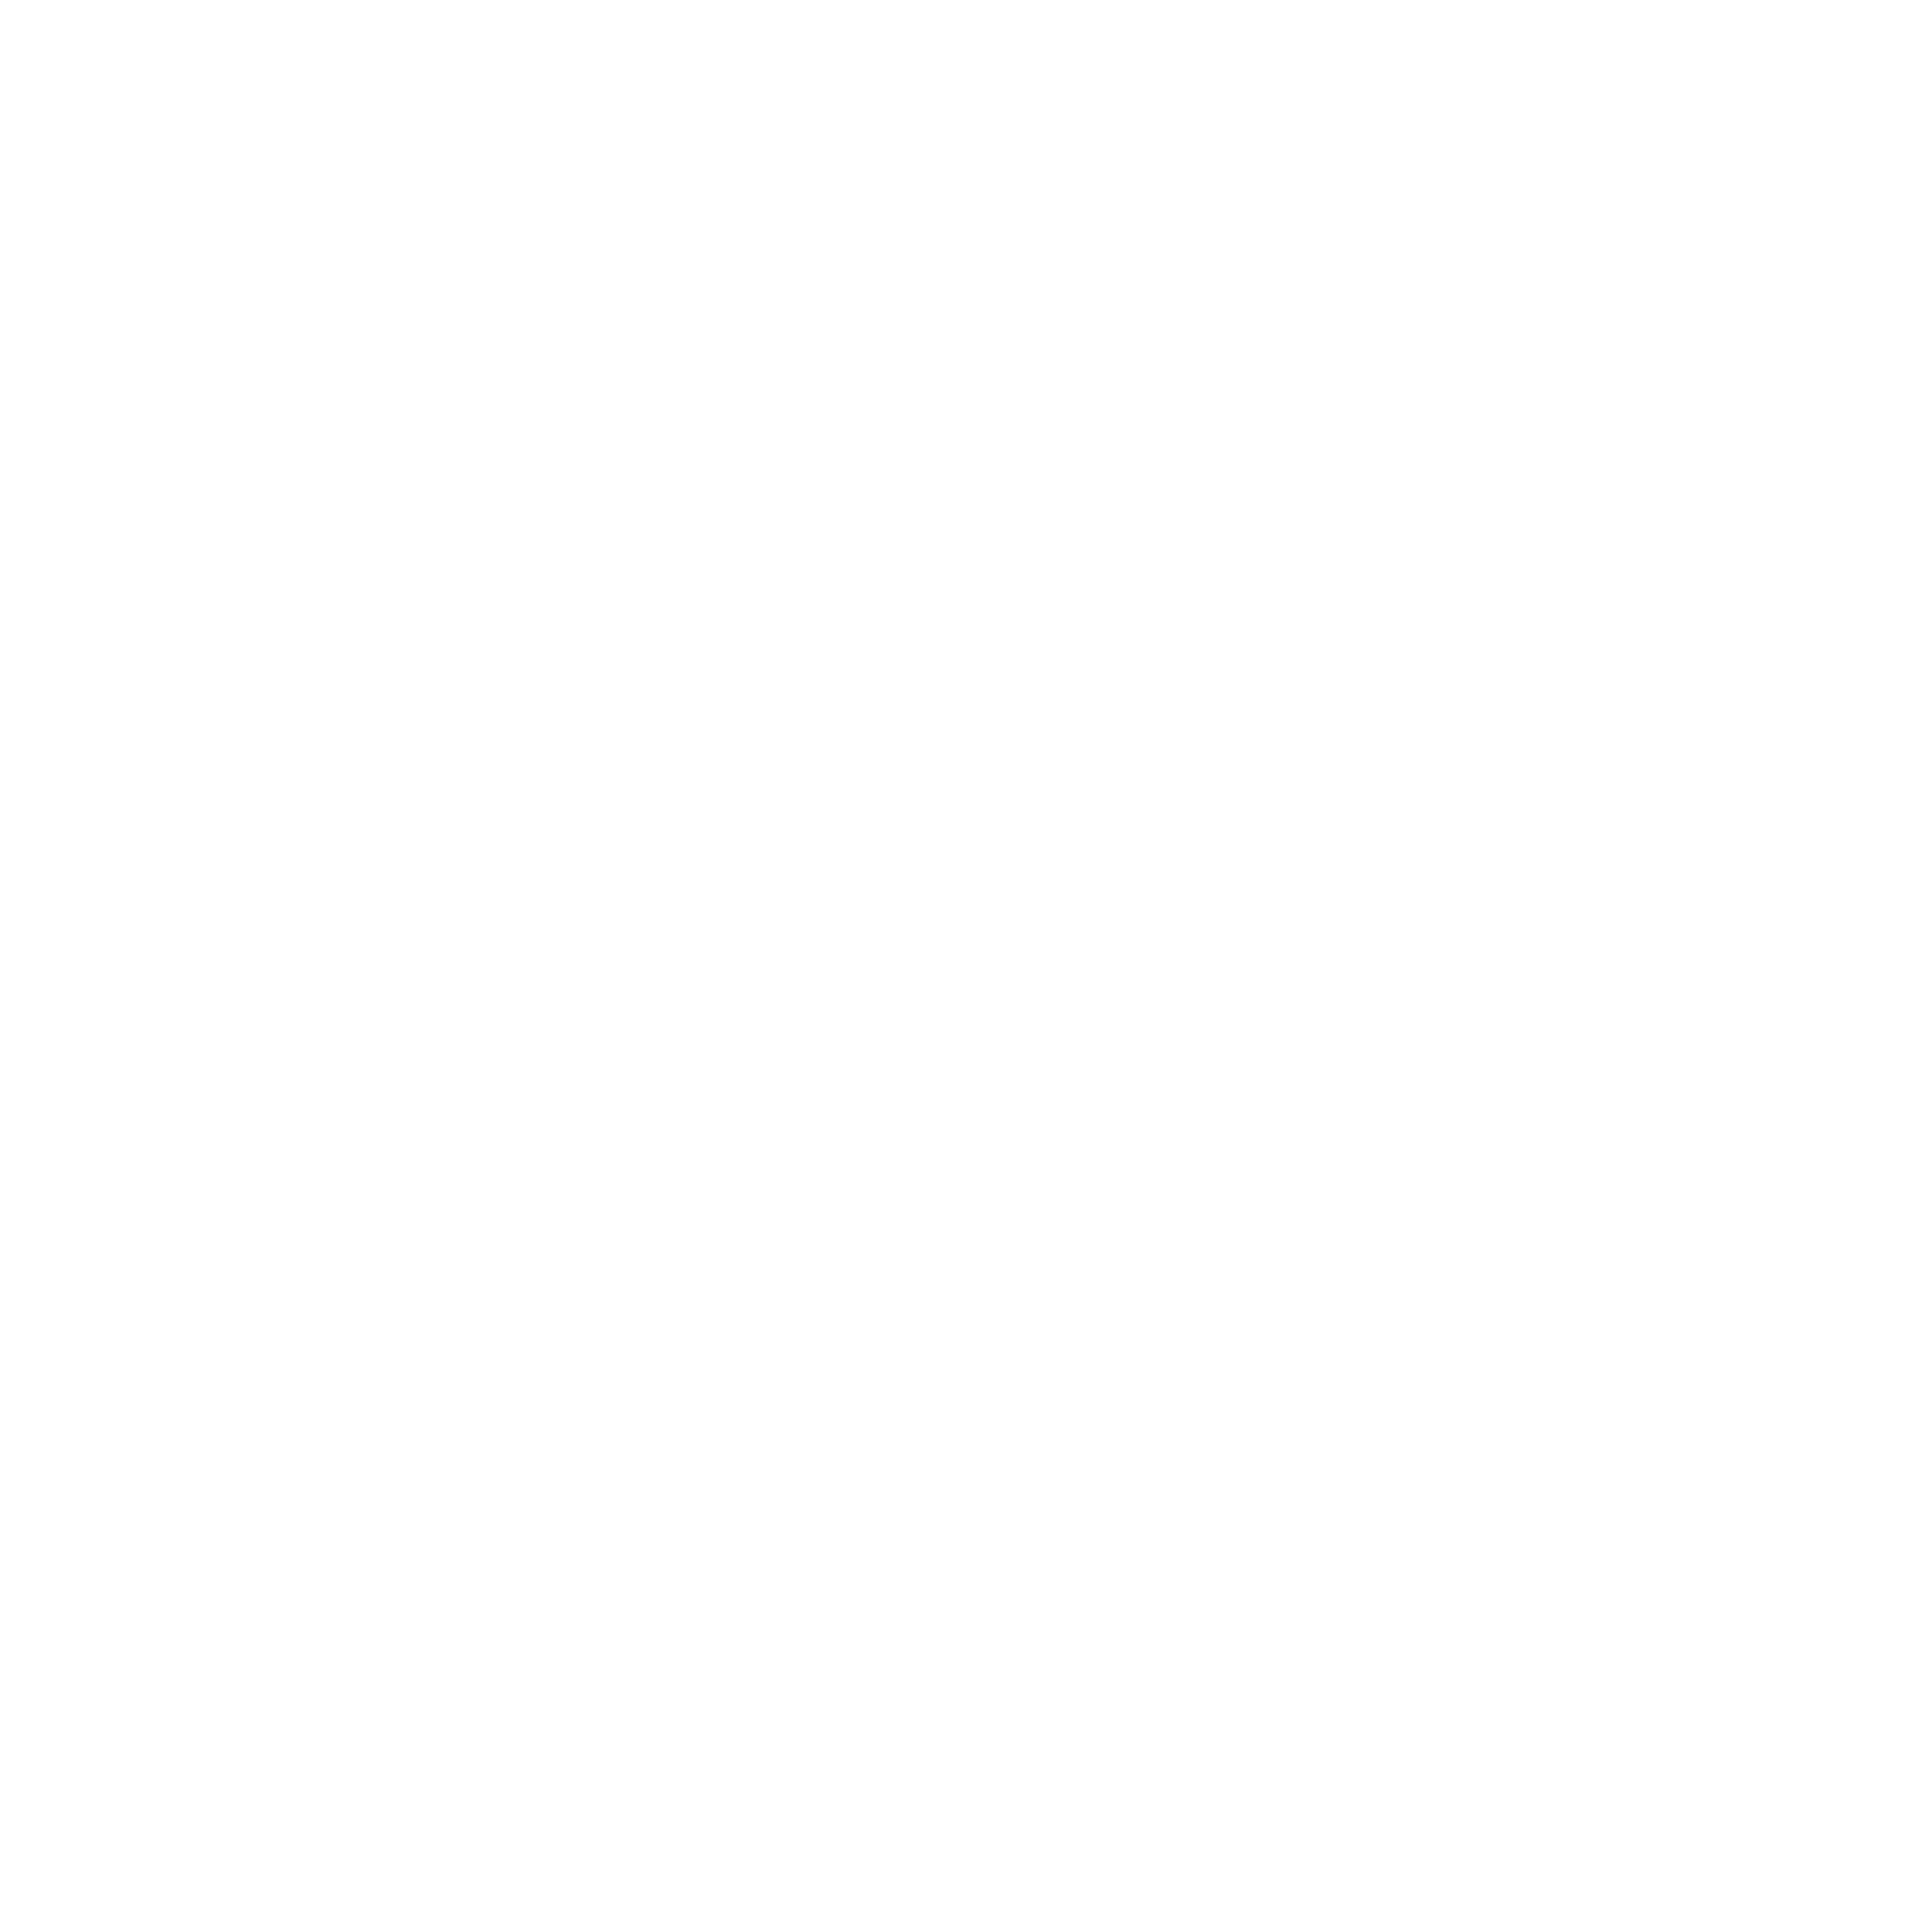 century 21 c21 Sticker by Century21 Radial